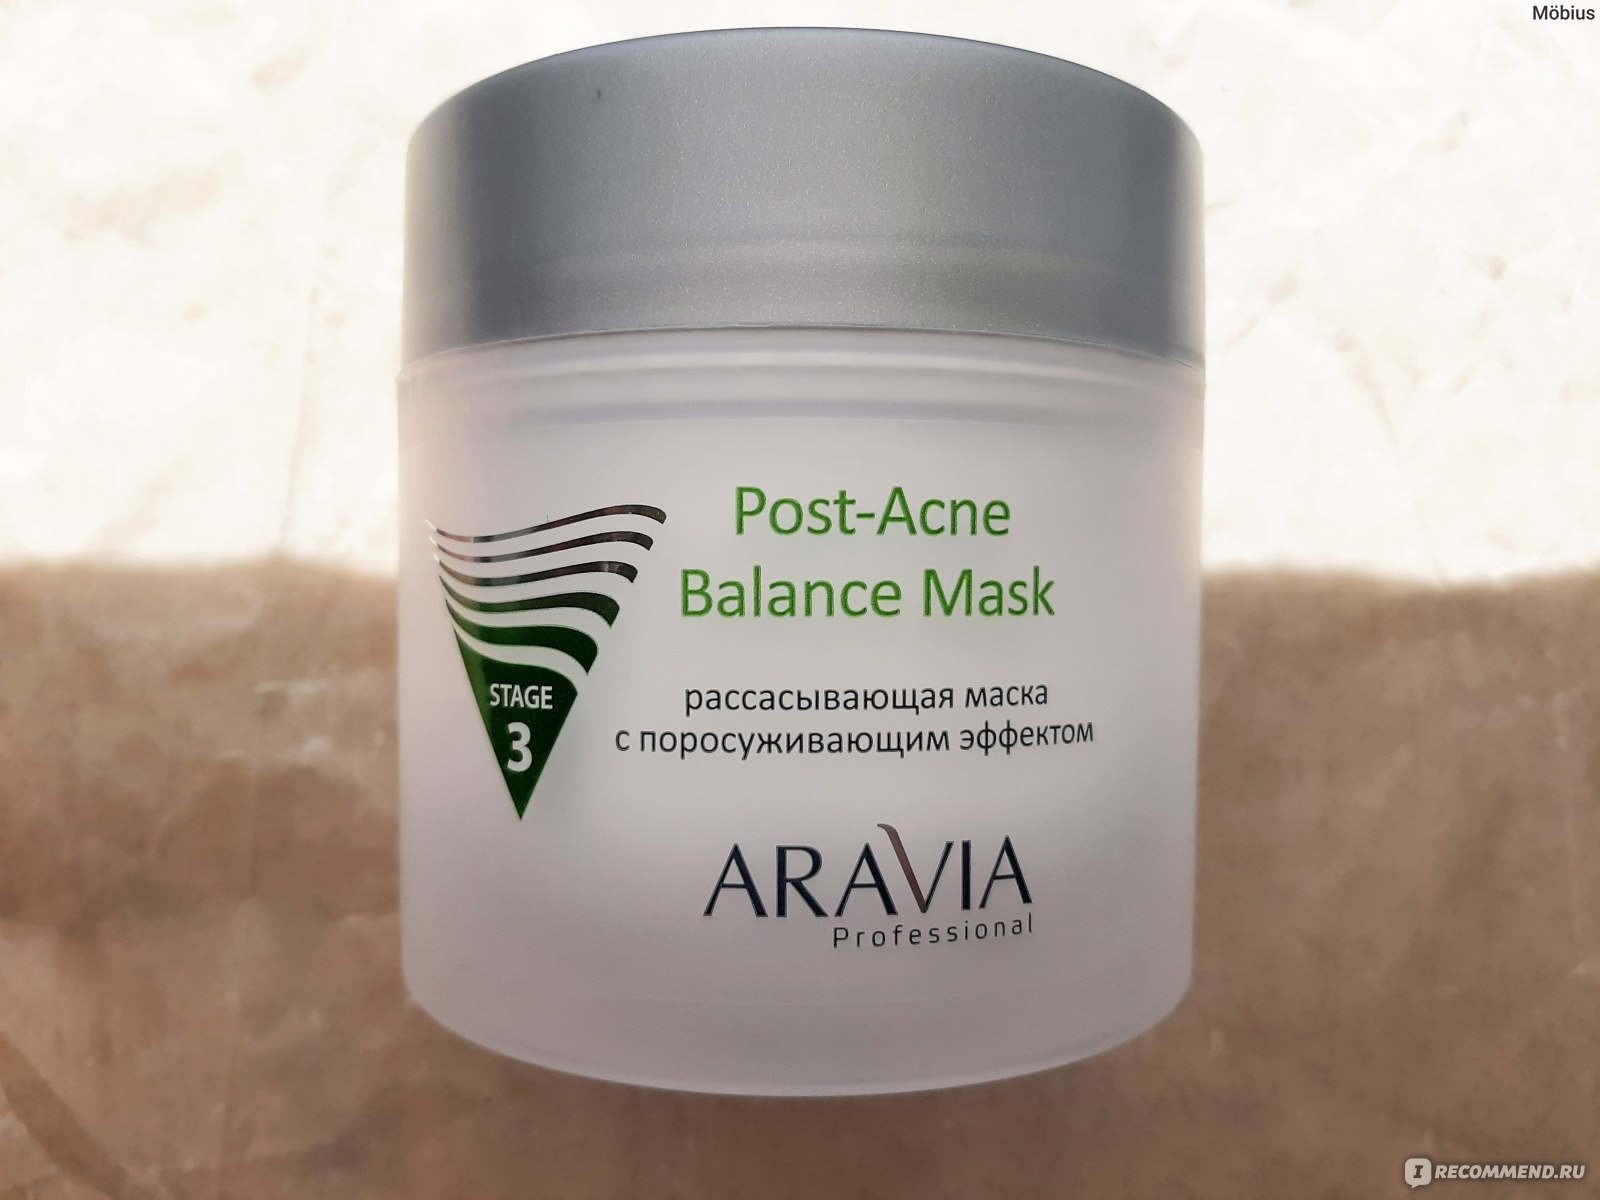 Поросуживающая маска отзывы. Поросуживающая маска Аравия. Маска Aravia рассасывающая. Аравия рассасывающая маска с поросуживающим эффектом. Aravia professional Post-acne Balance Mask.